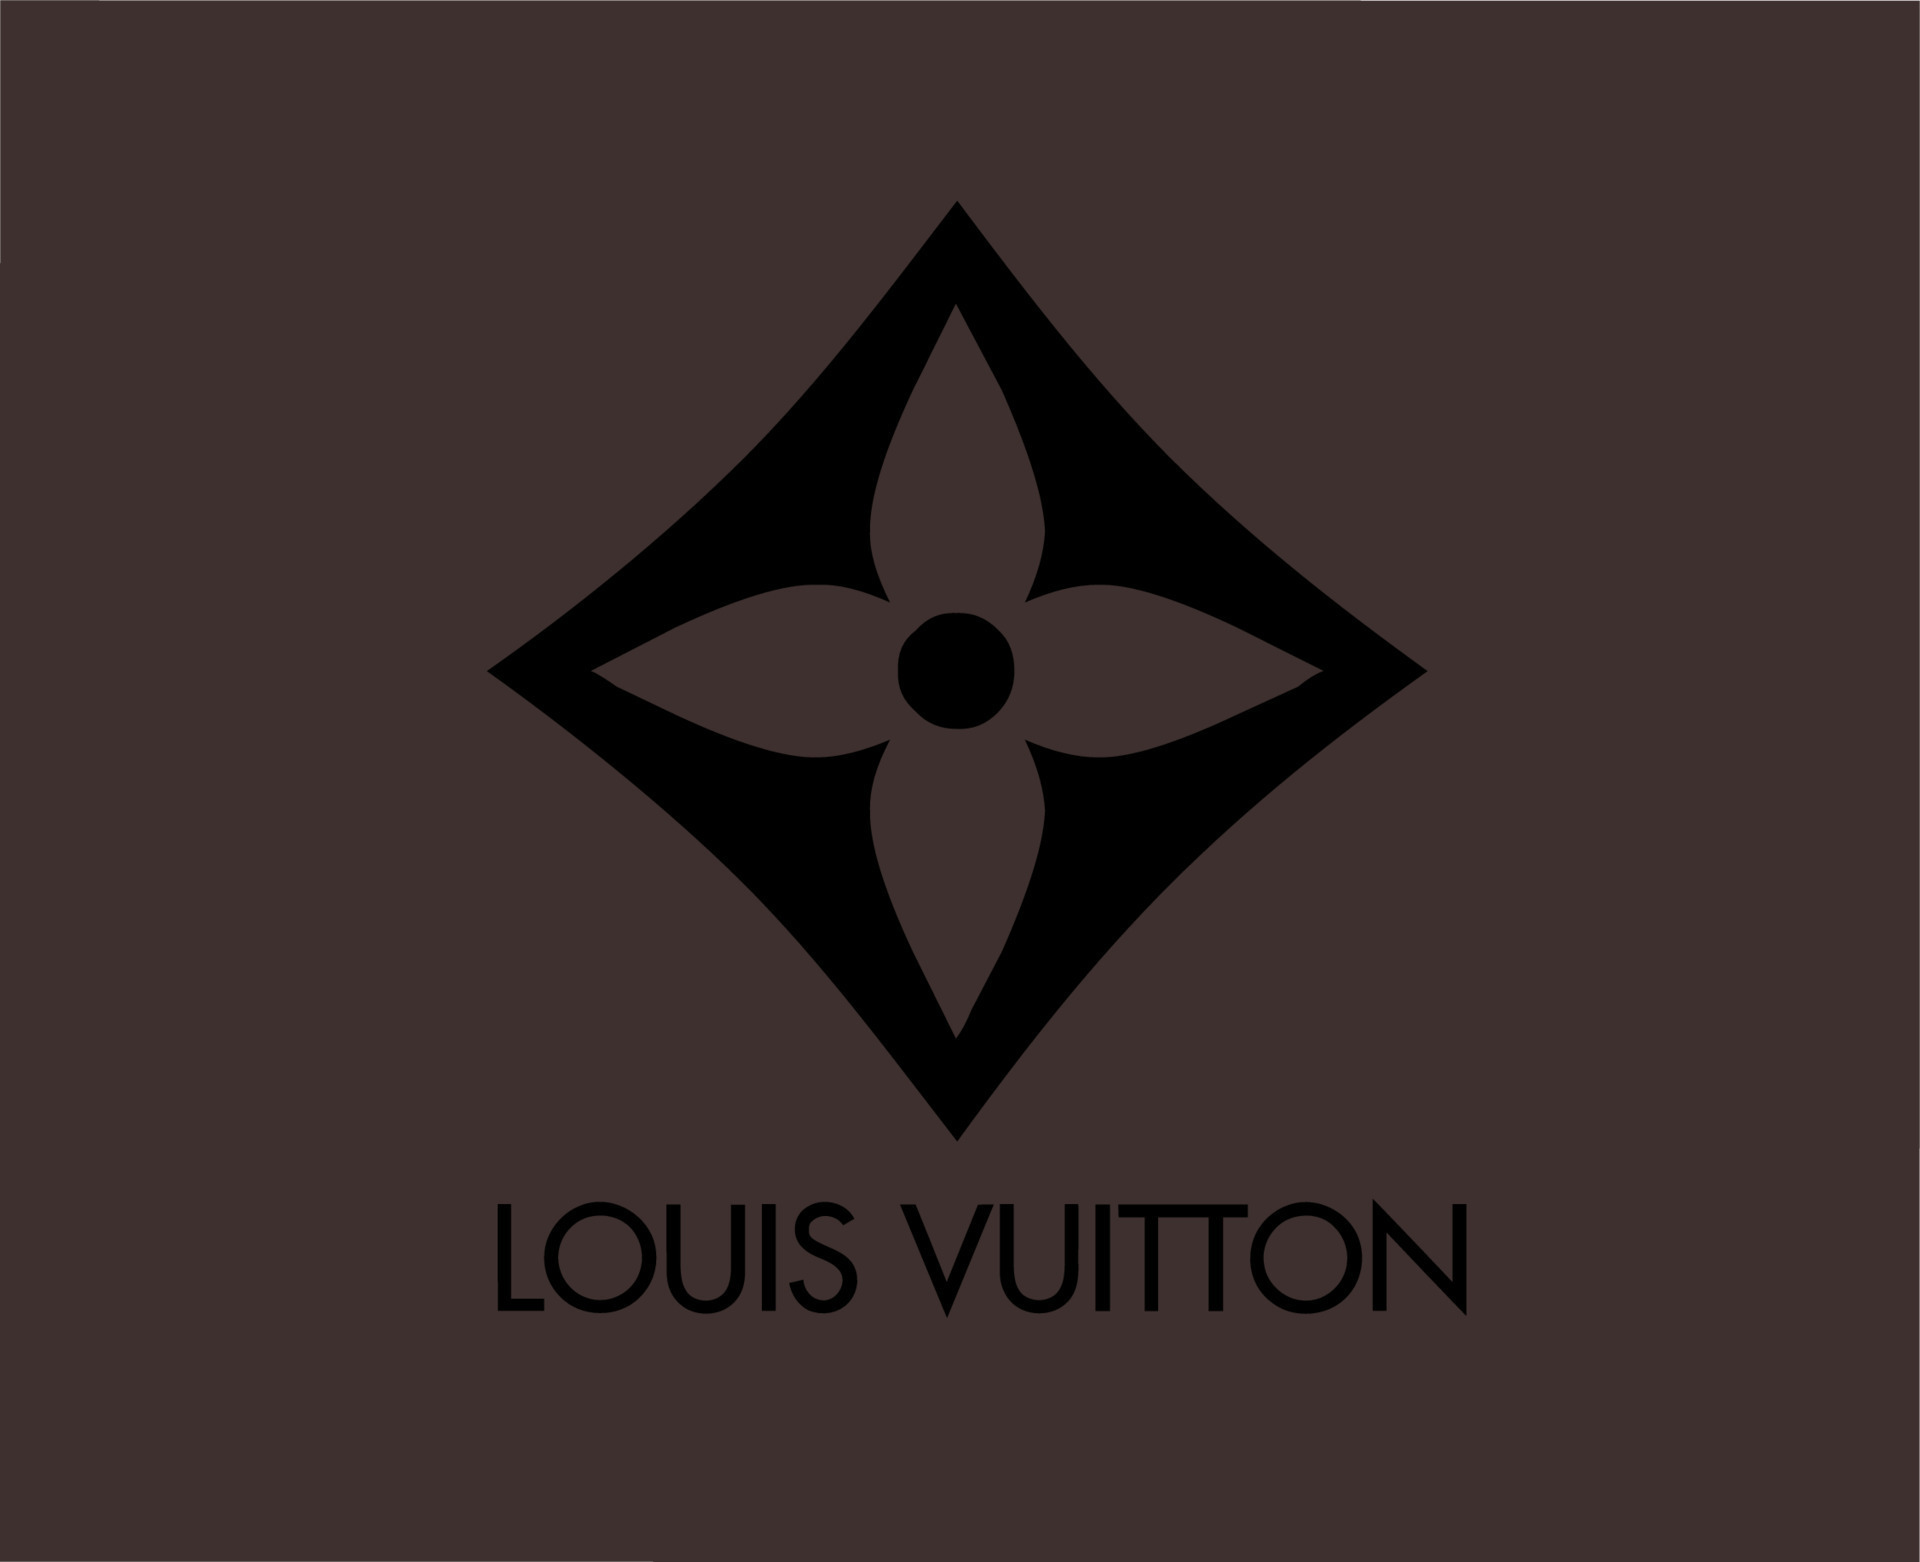 Louis Vuitton Brand Logo Background Black Symbol Design Clothes Fashion  Vector Illustration 23871155 Vector Art at Vecteezy